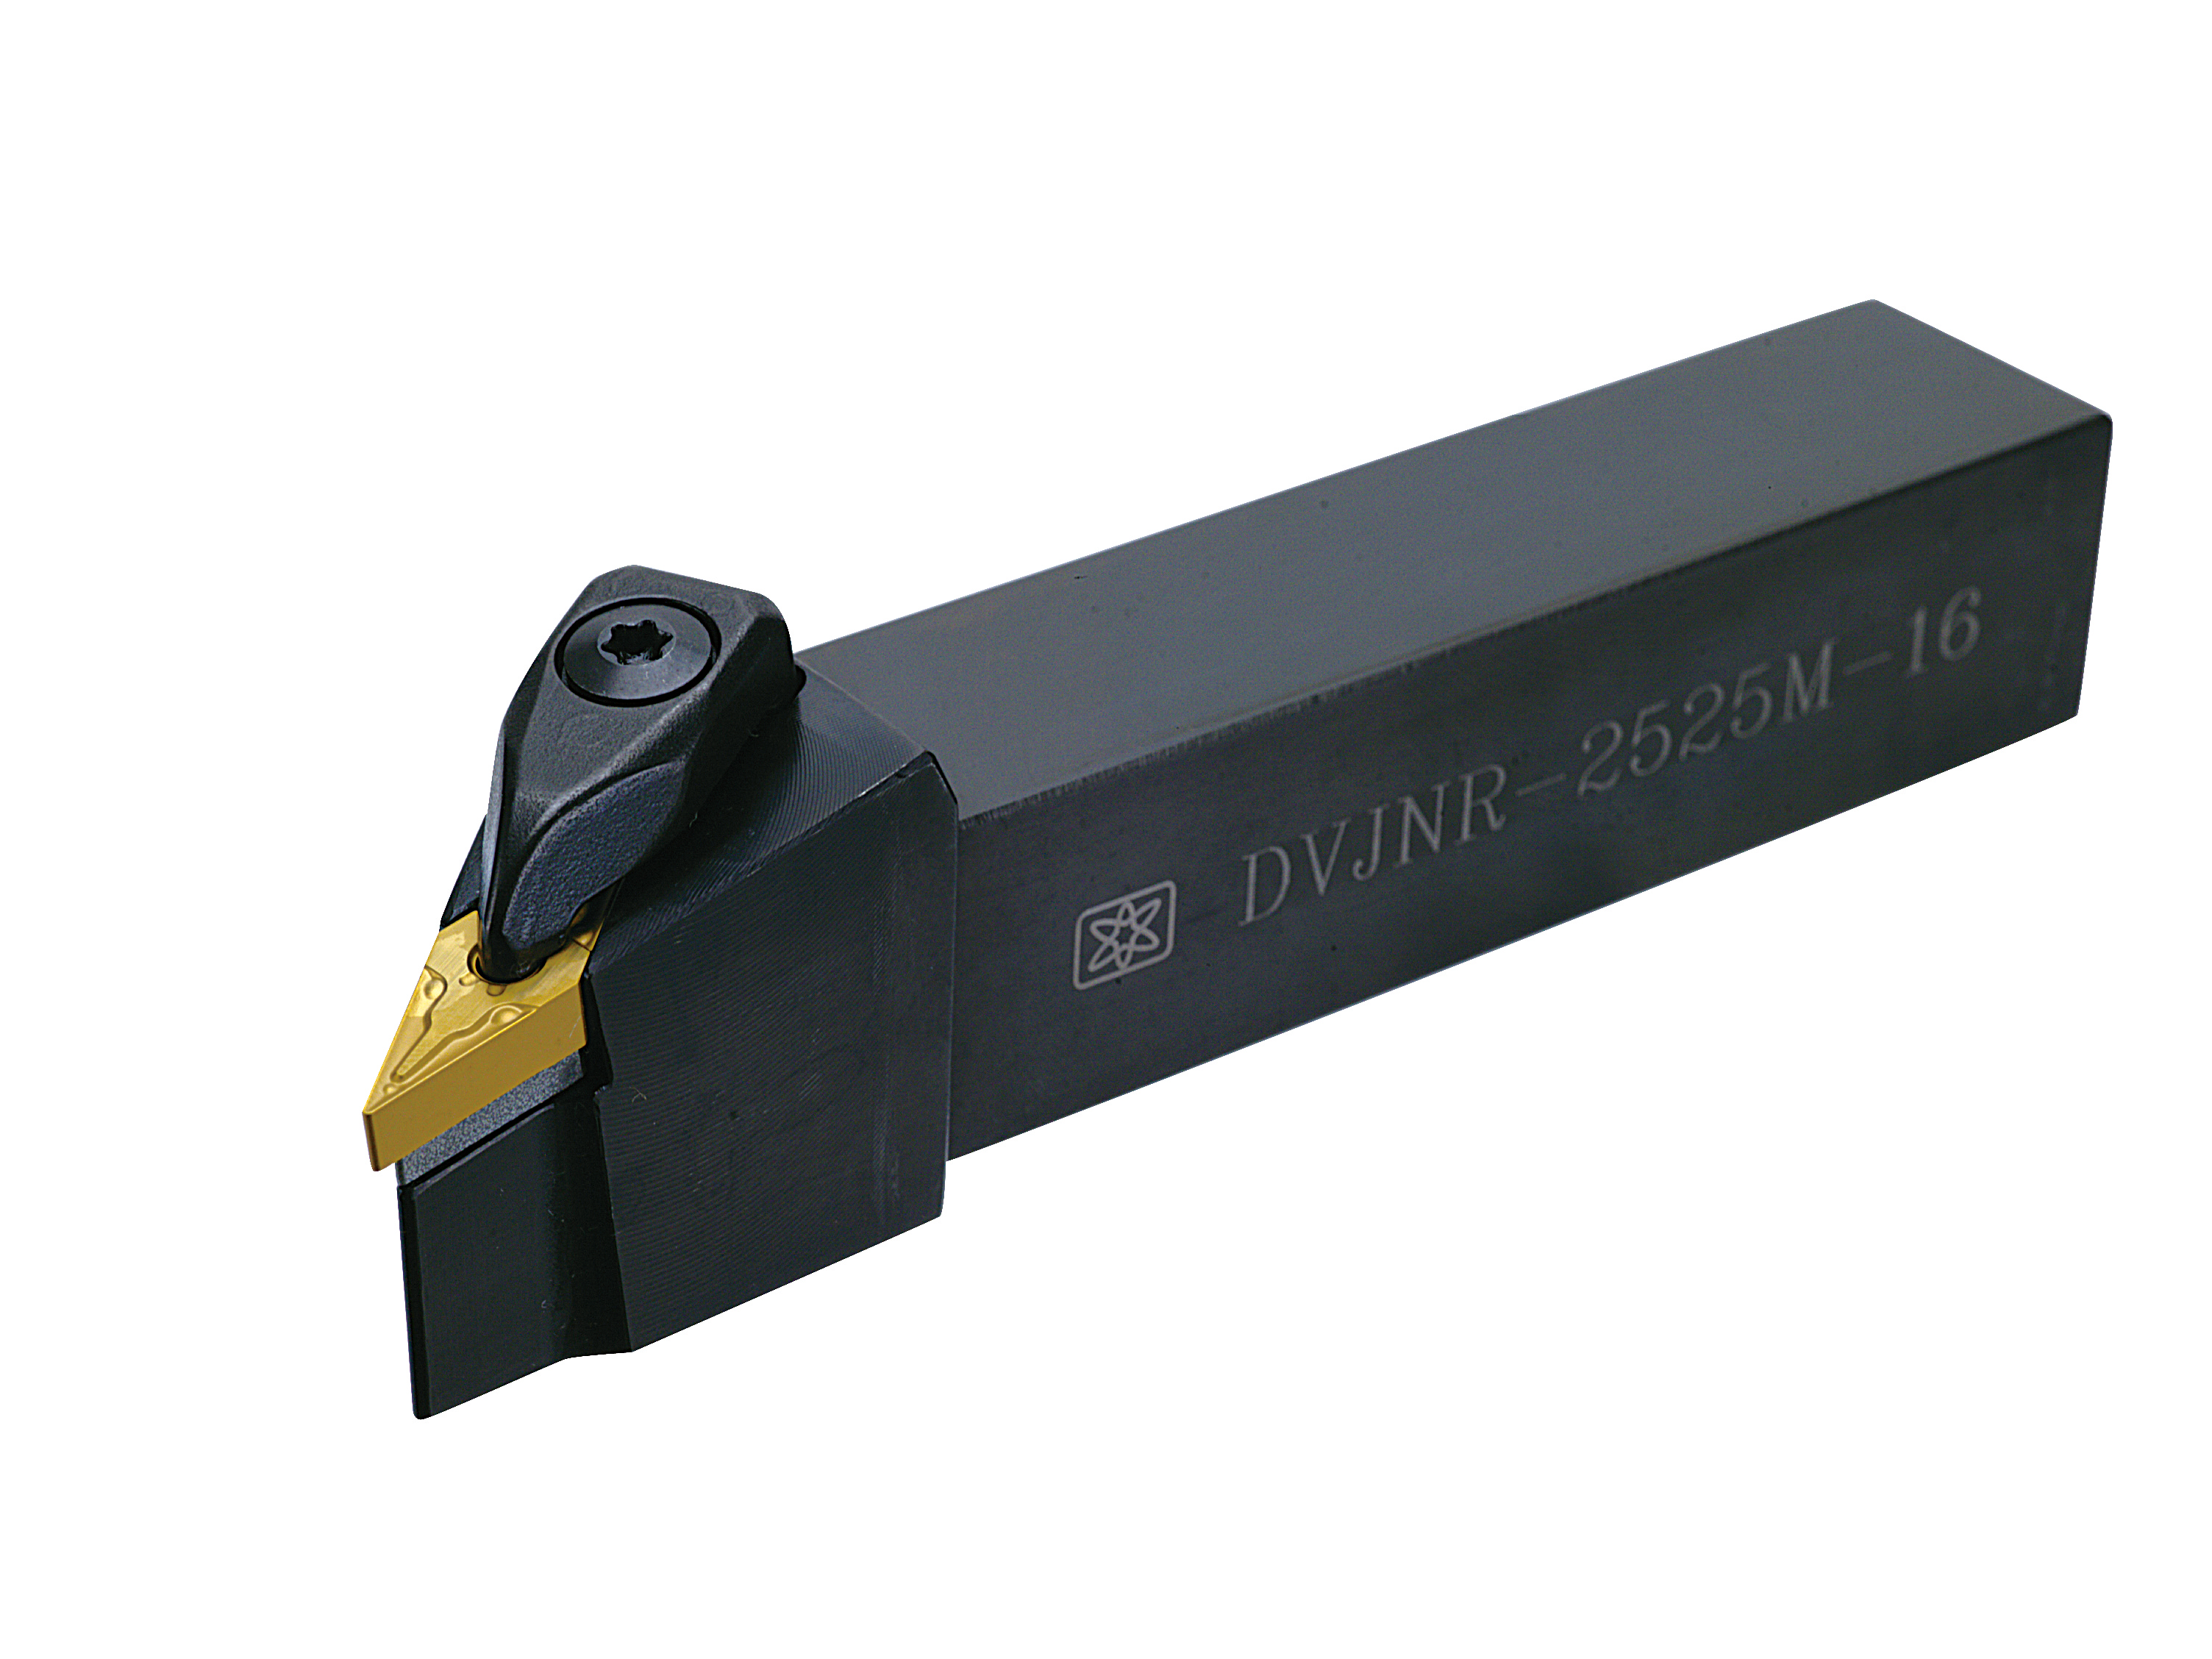 產品|DVJNR (VNMG1604) 外徑車刀